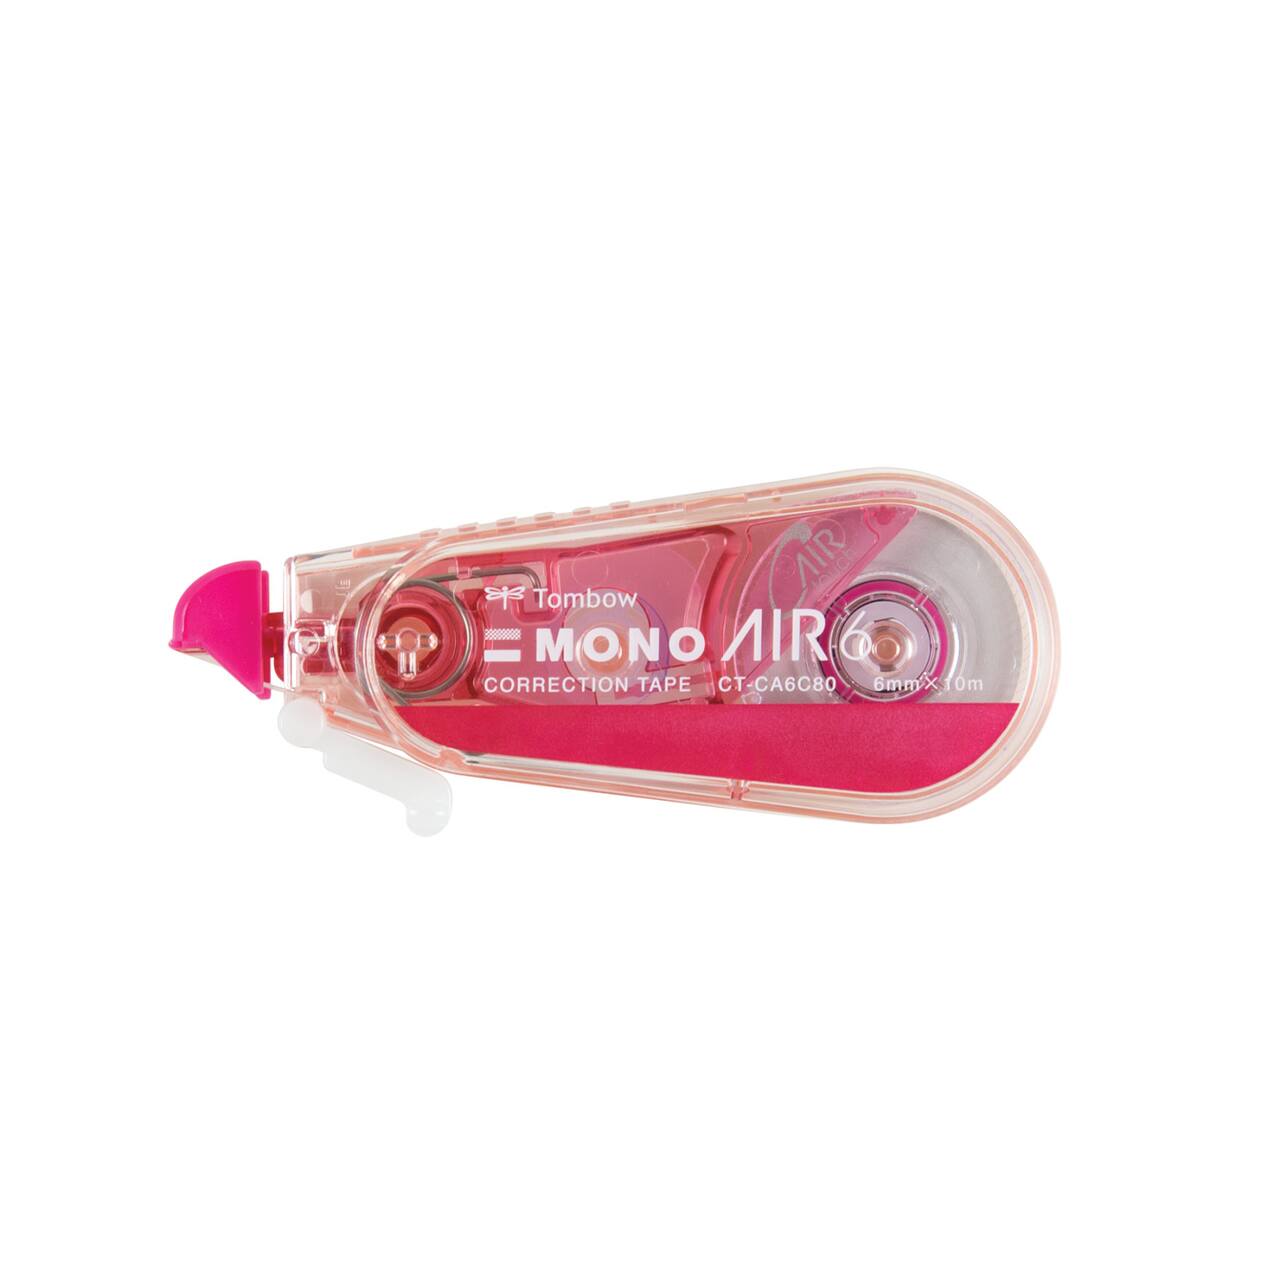 Tombow Mono Air Correction Tape